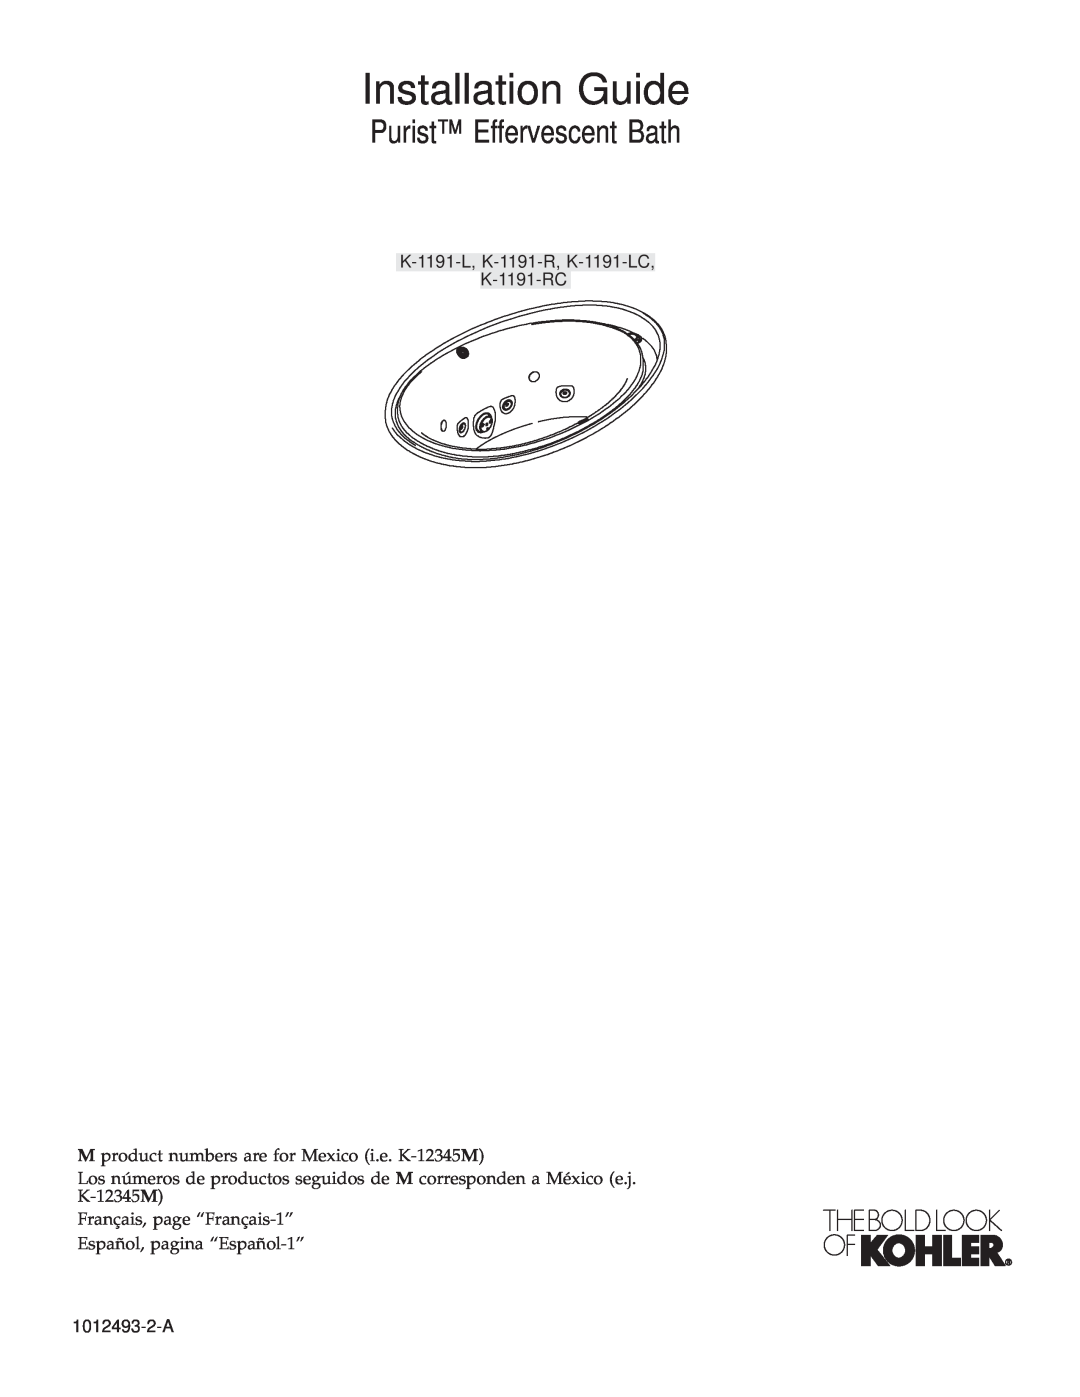 Kohler K1191-R, K-1191-RC, K1191-LC manual Installation Guide, Purist Effervescent Bath 